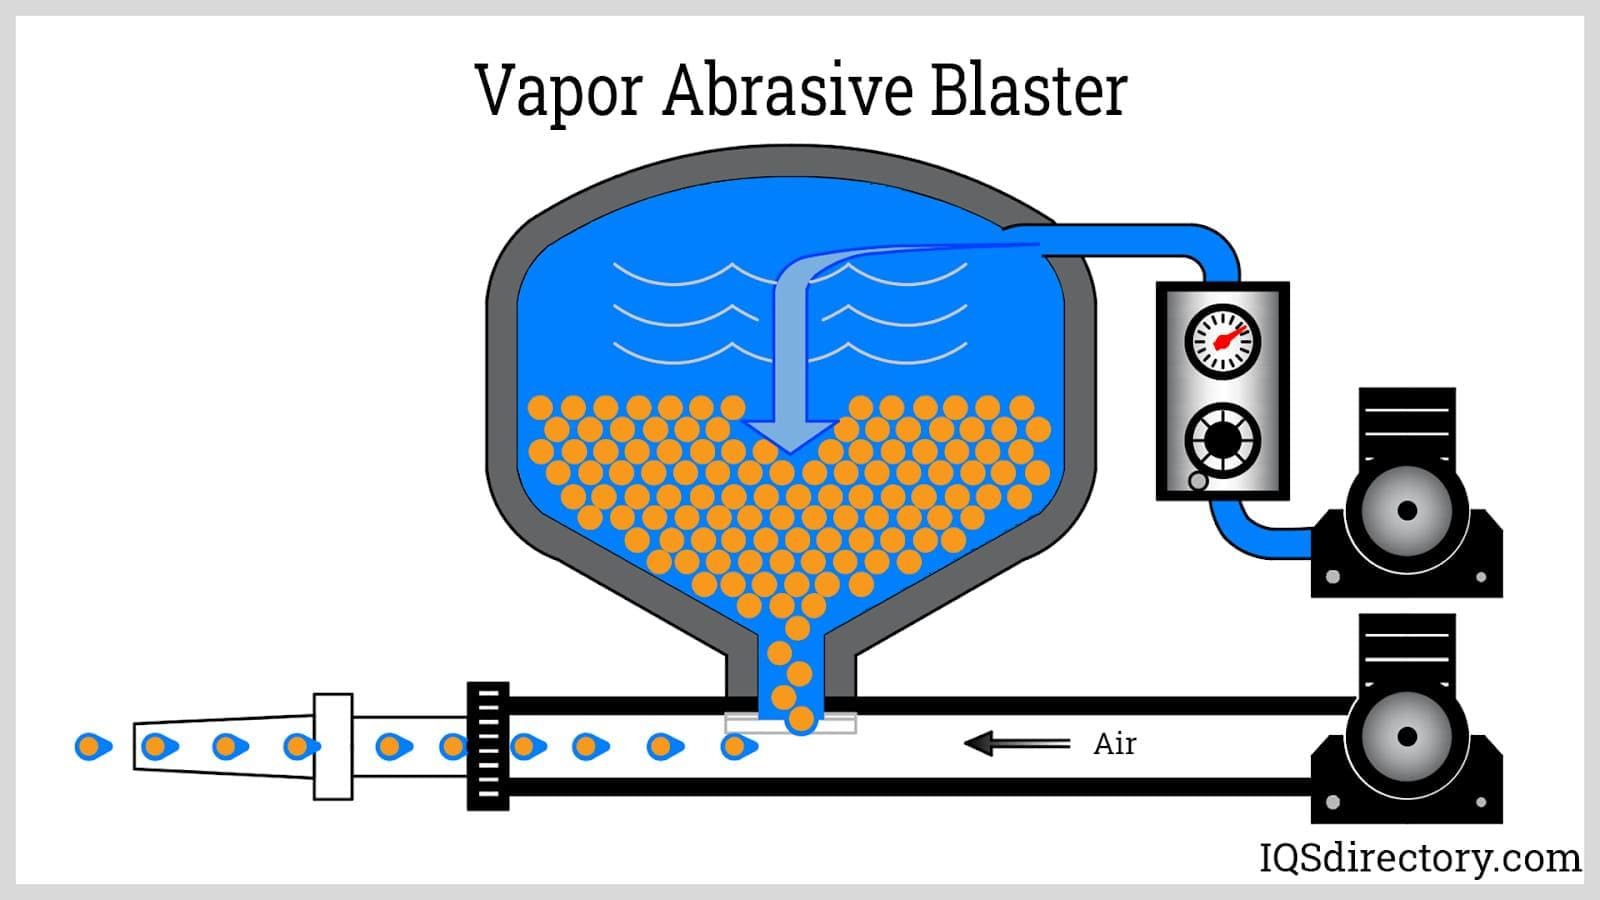 Vapor Abrasive Blaster